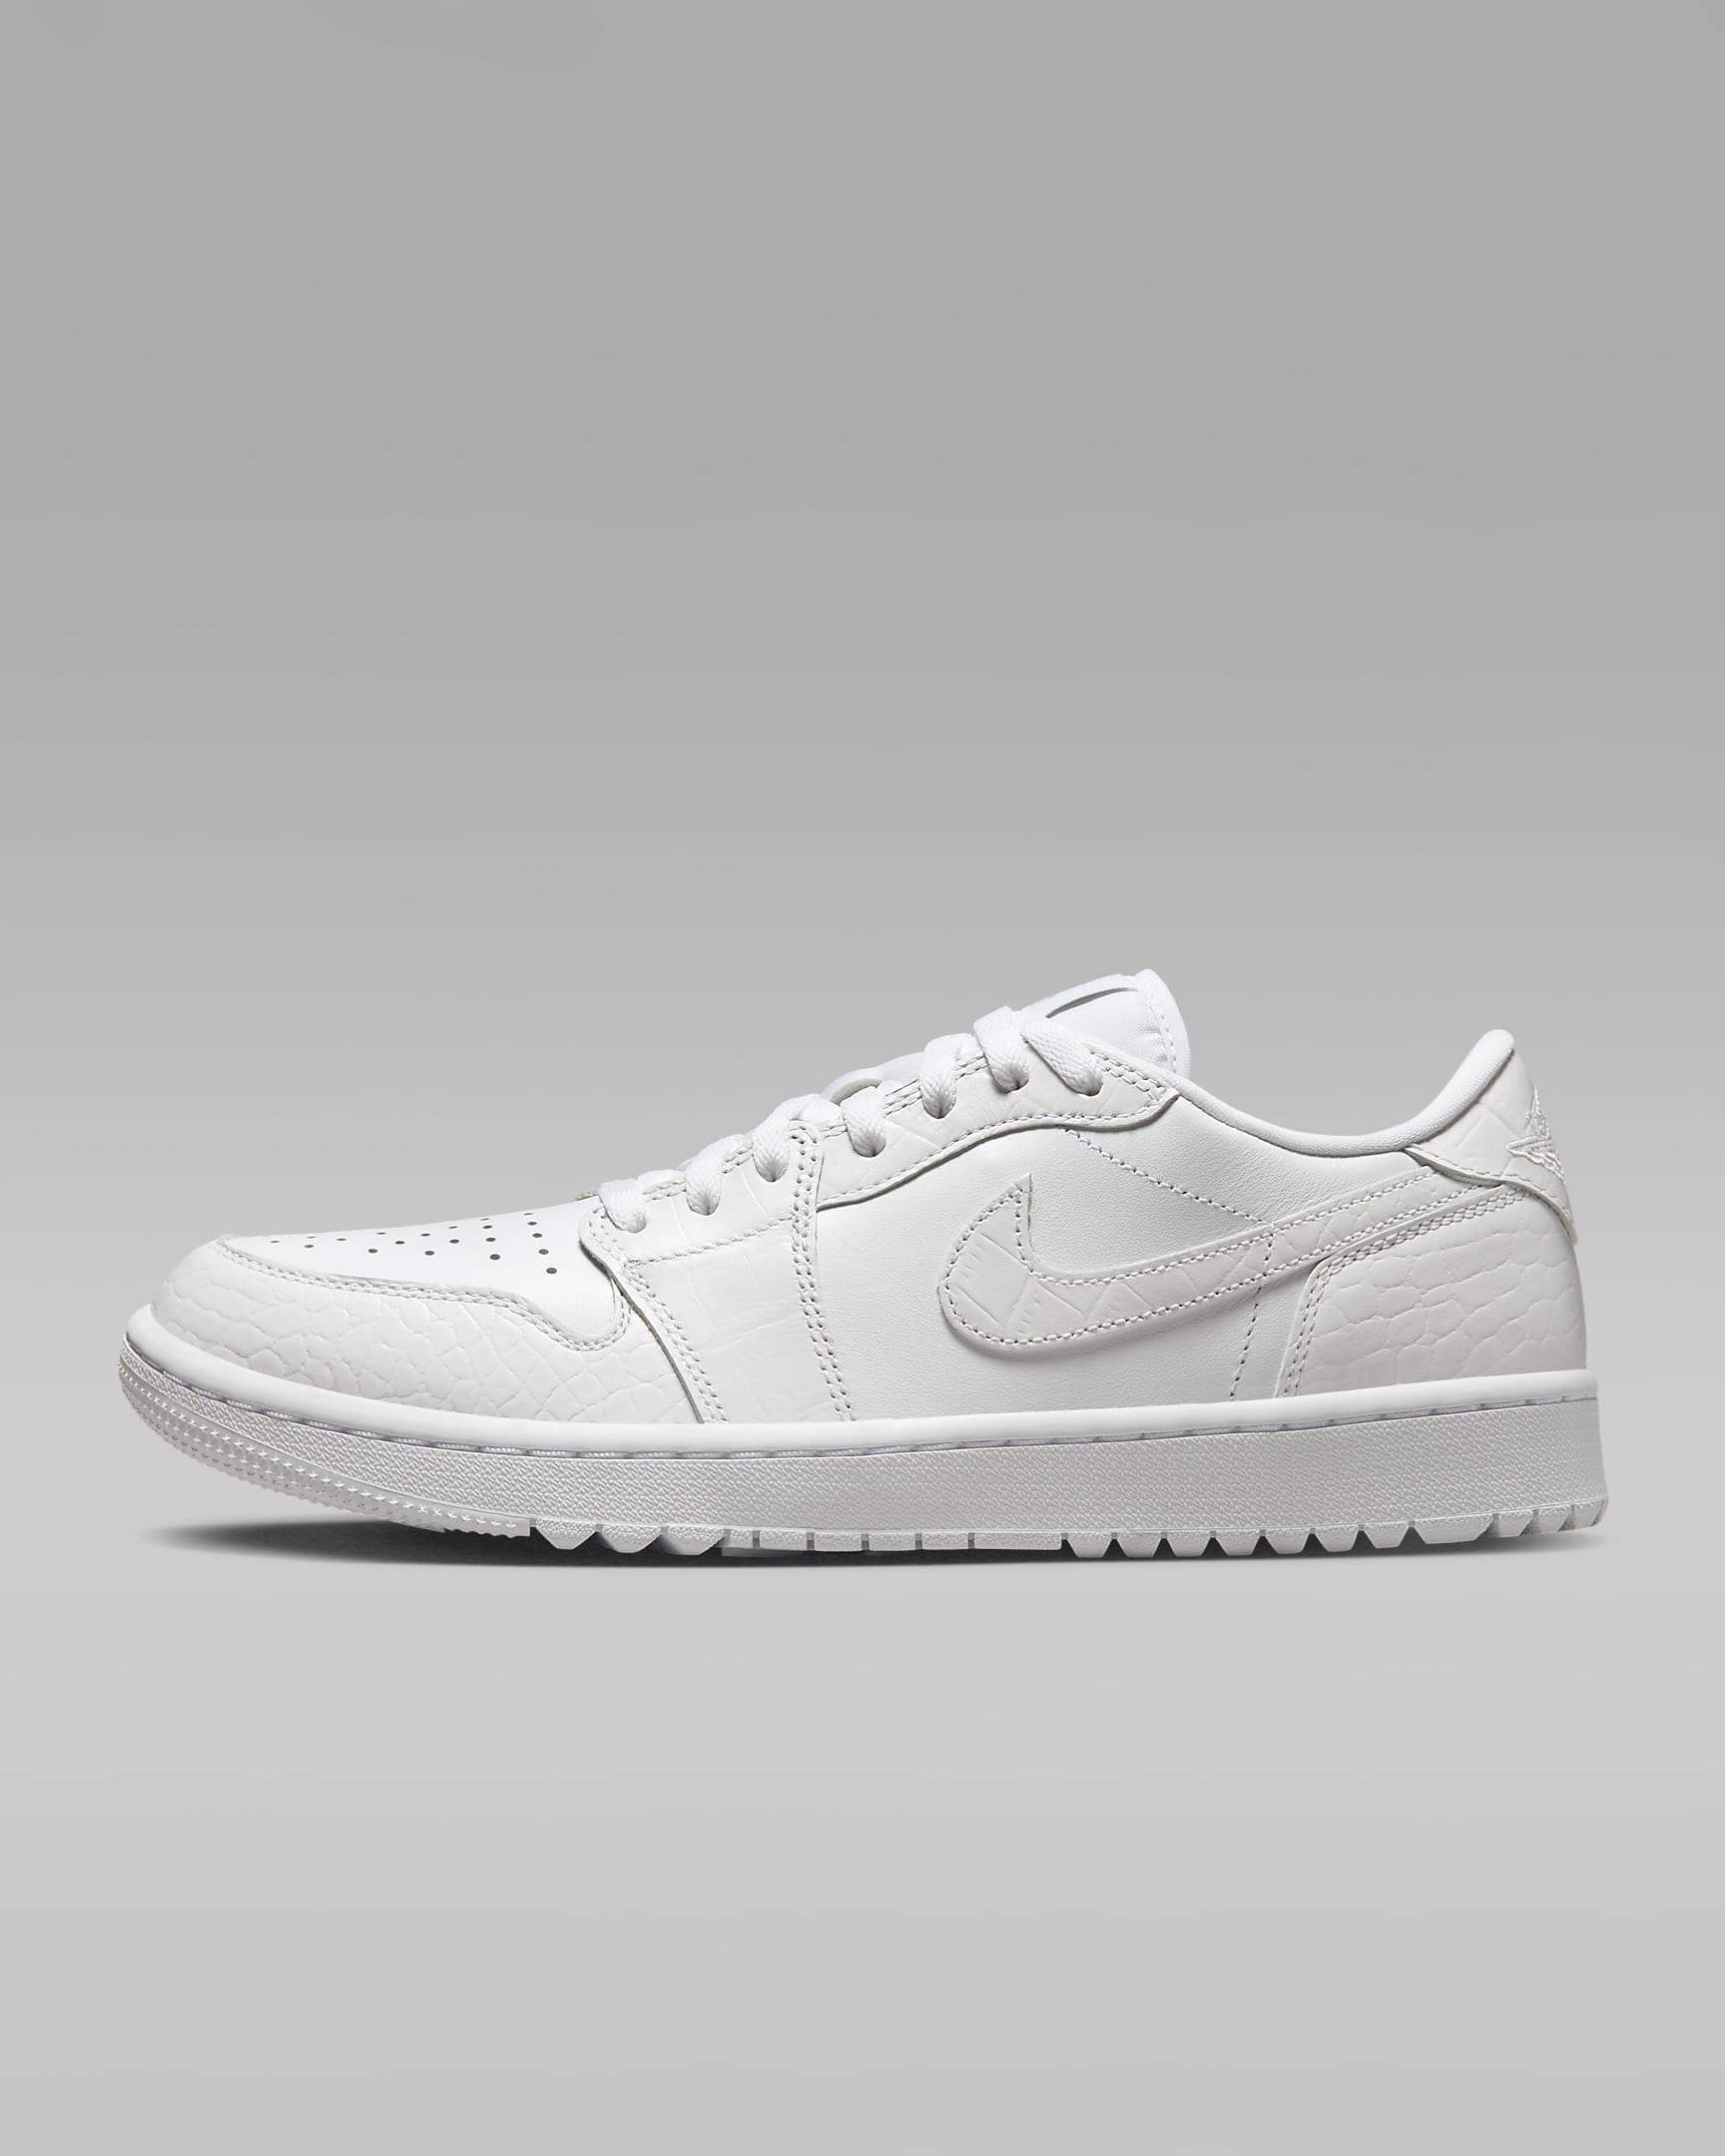 Air Jordan 1 Low G Golf Shoes - White/Pure Platinum/White